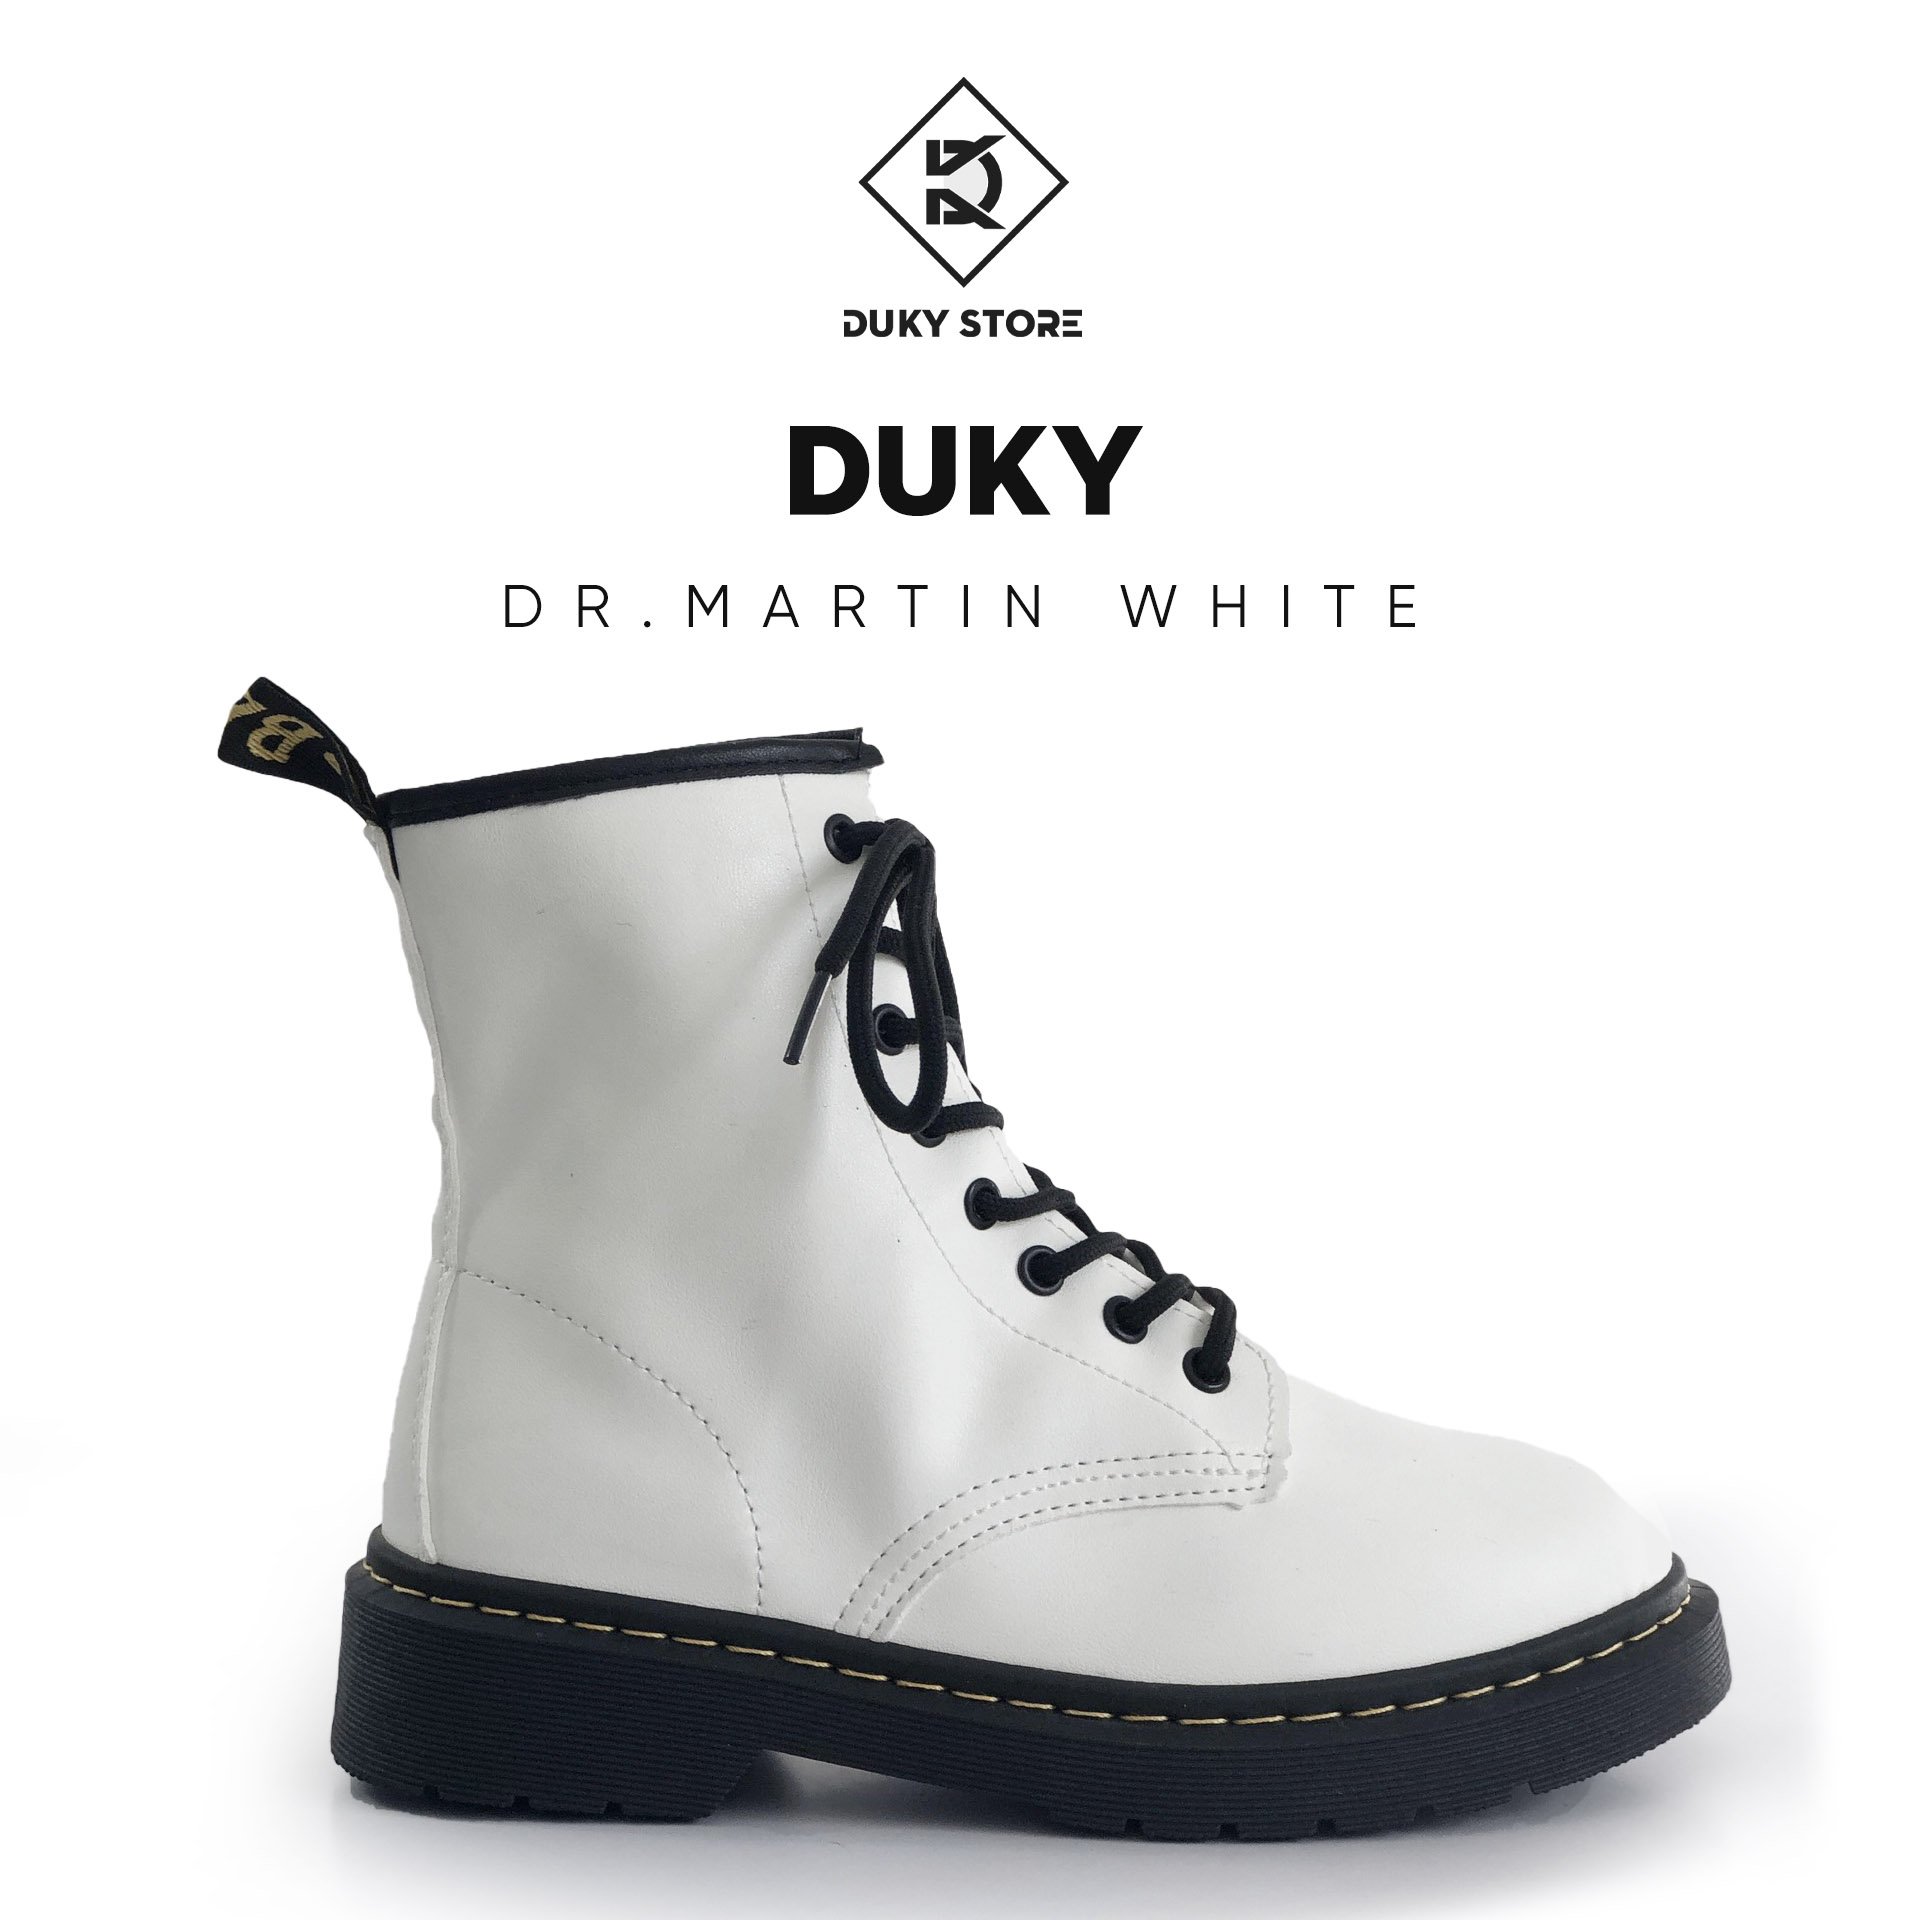  - WHITE - Duky Store